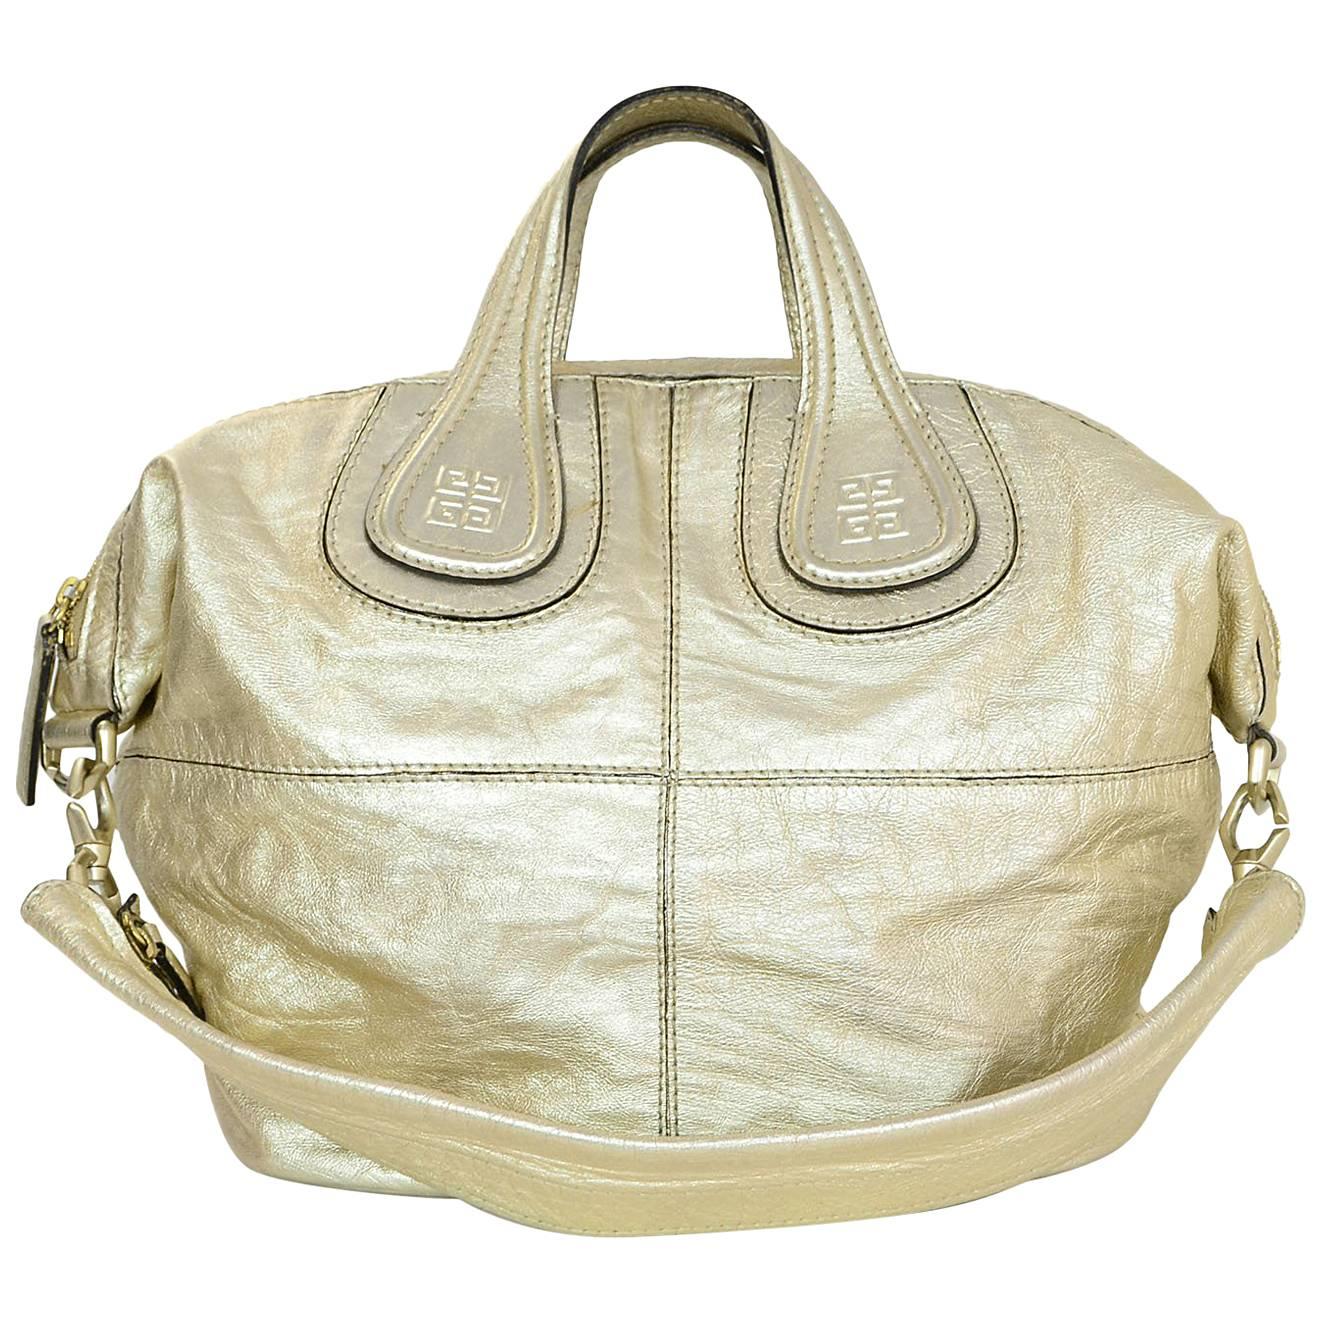 Givenchy Gold Leather Nightingale Satchel Bag